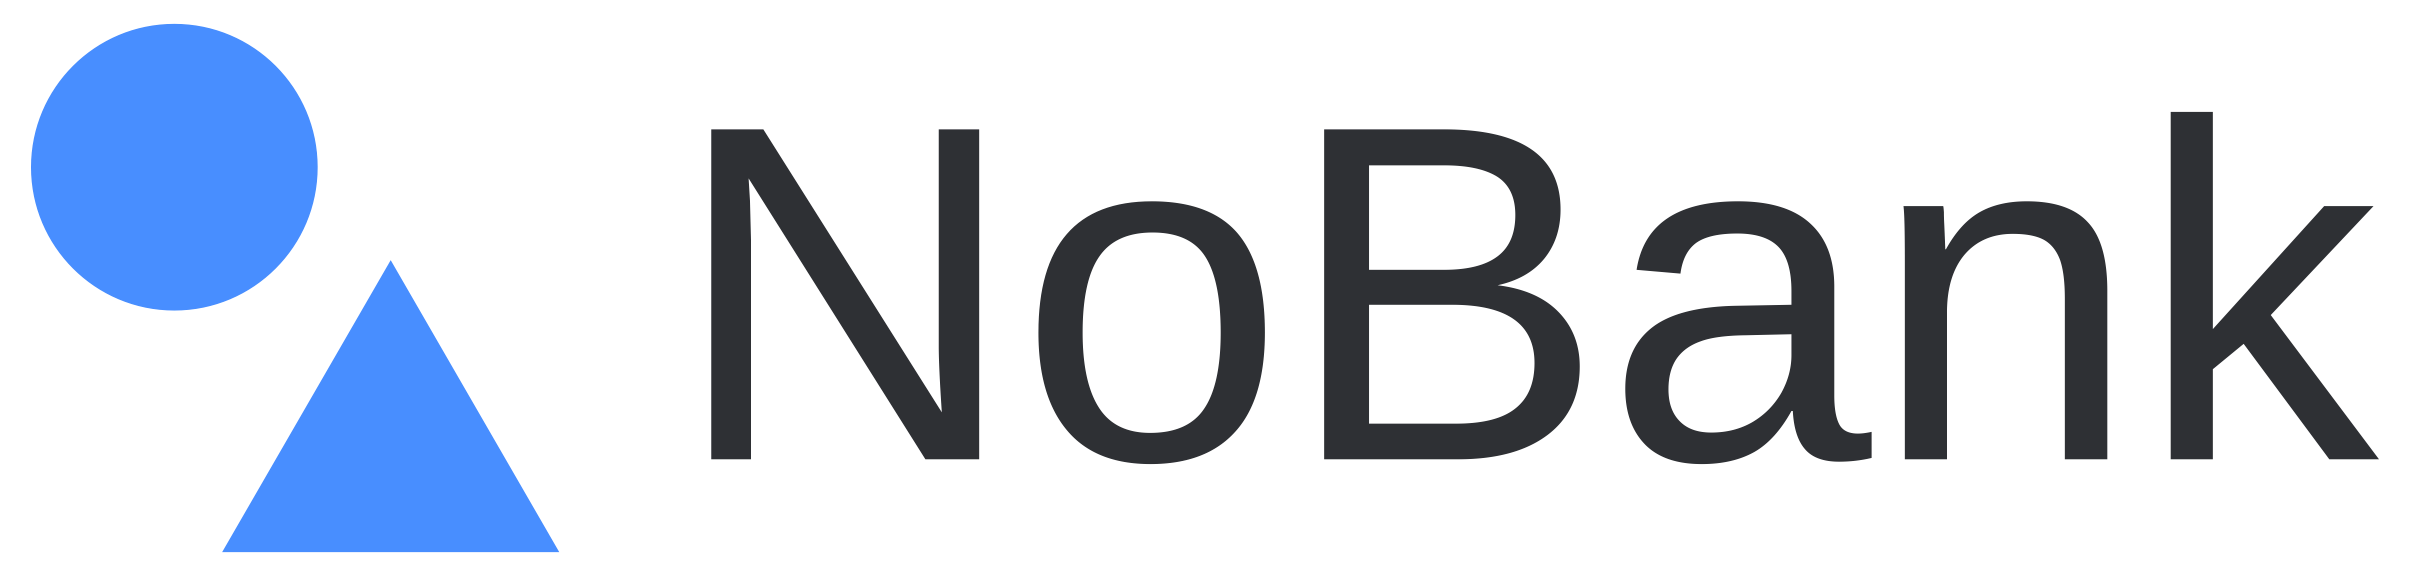 Bankist logo